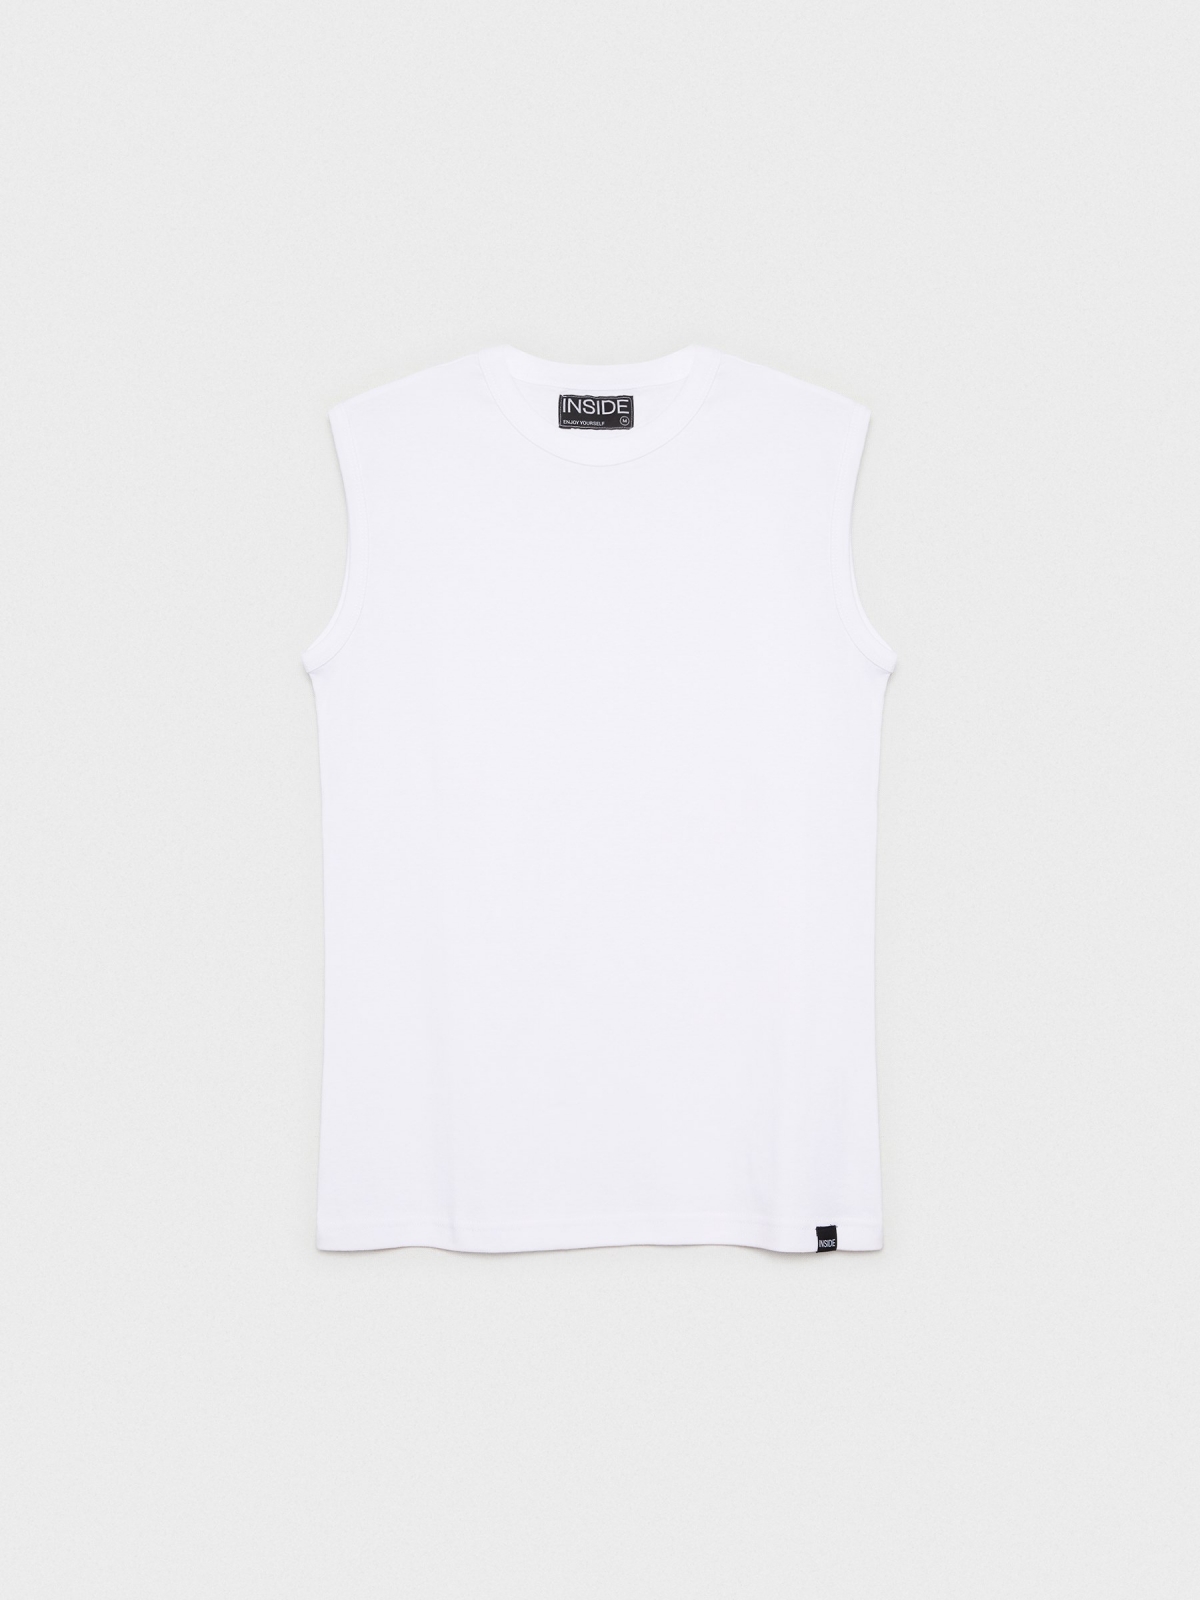  Basic sleeveless t-shirt white